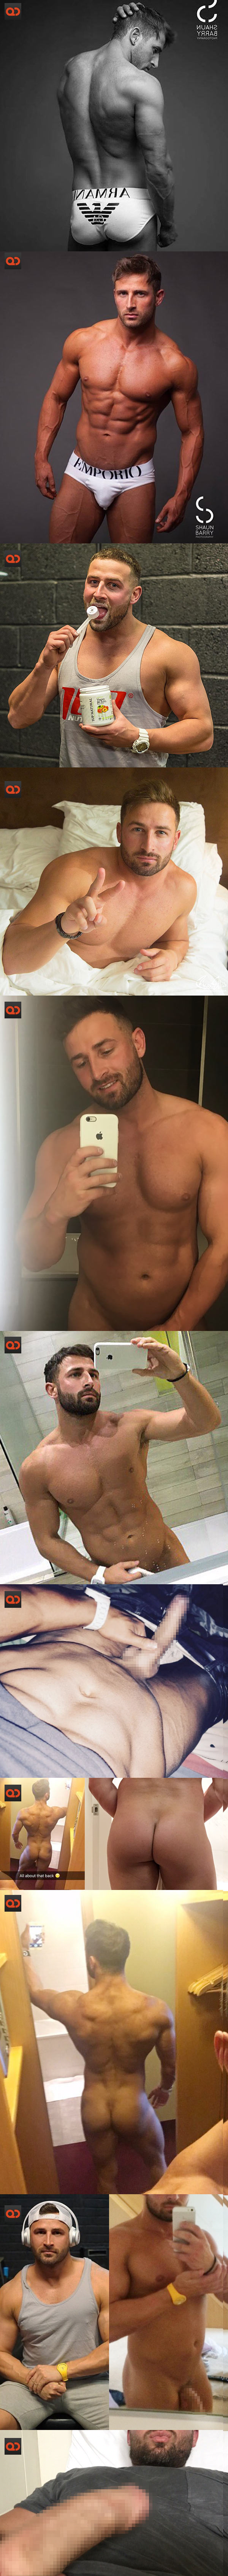 Chris Spearman, Instagram Star And Fitness Model, Caught Jerking Off On Camera!